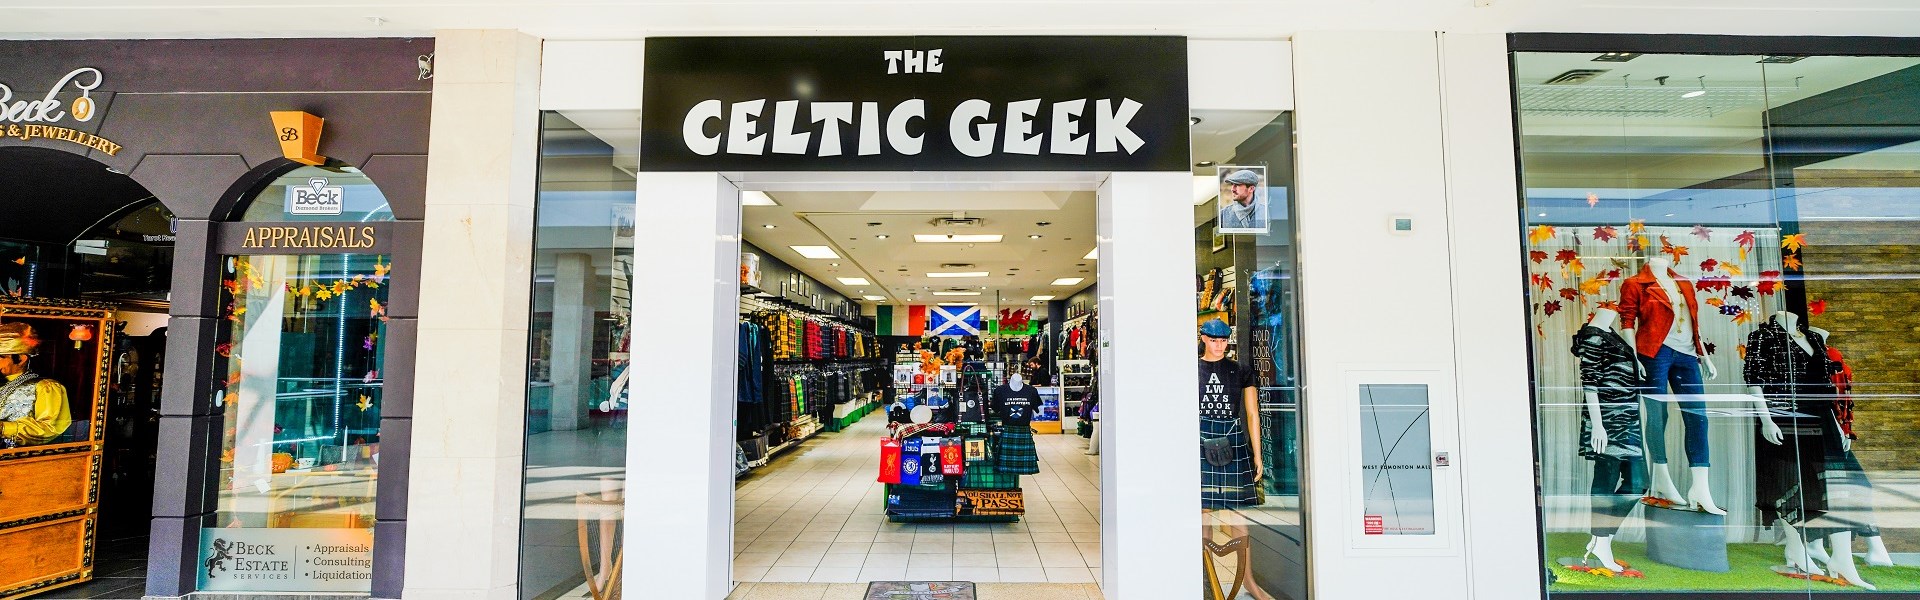 The Celtic Geek